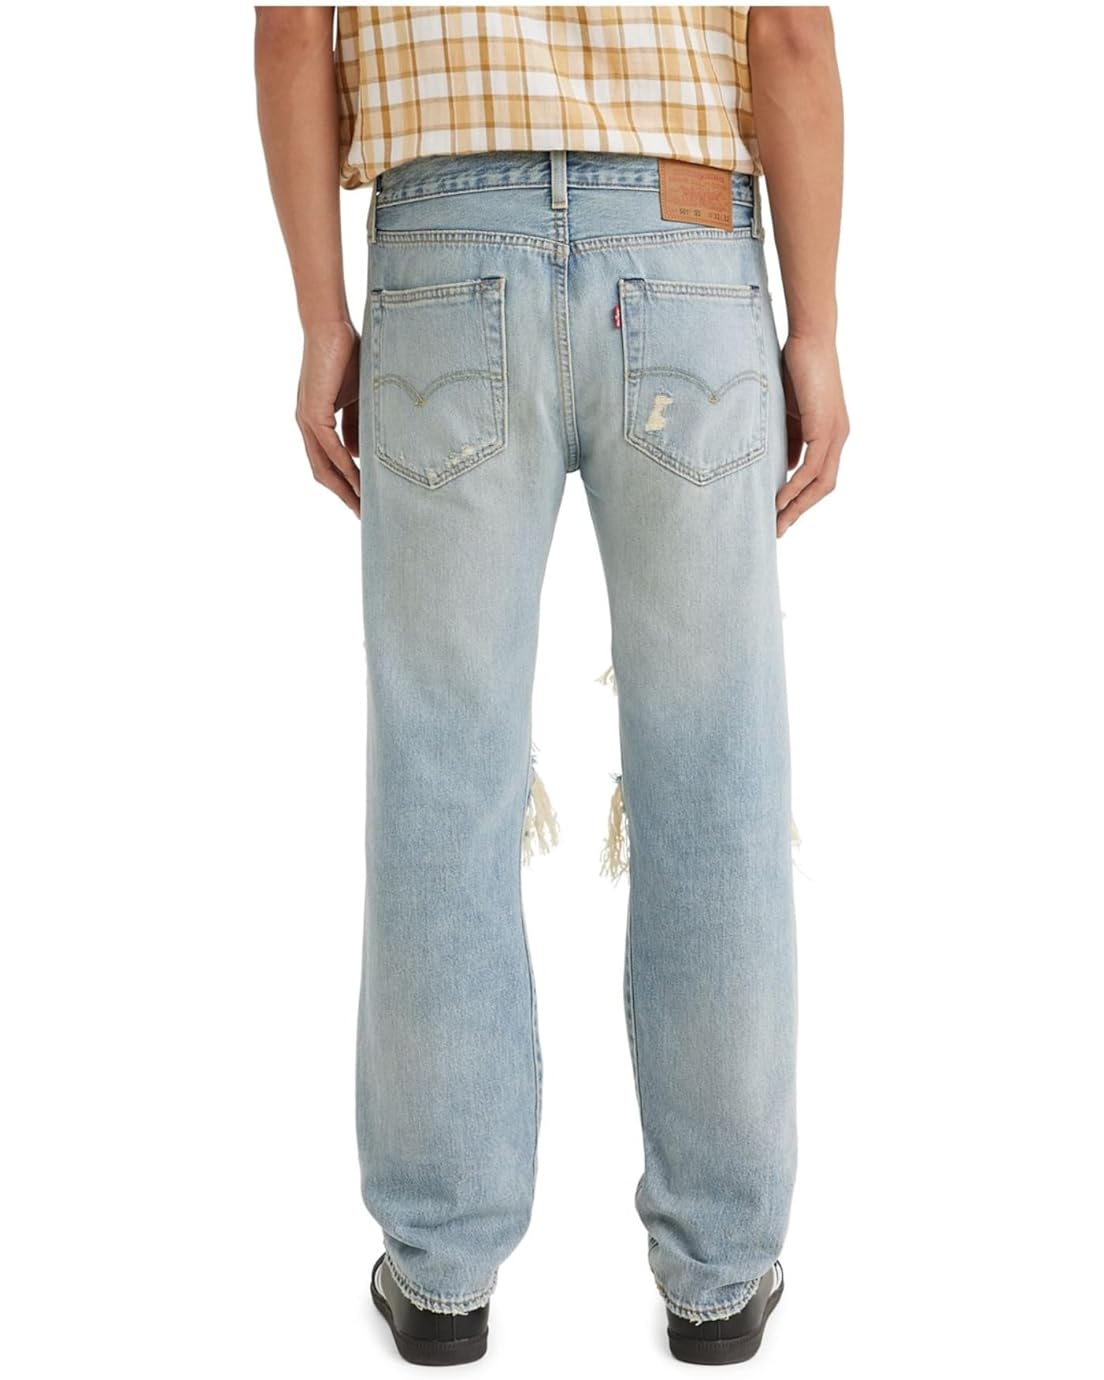  Levis Premium 501 93 Straight Jeans